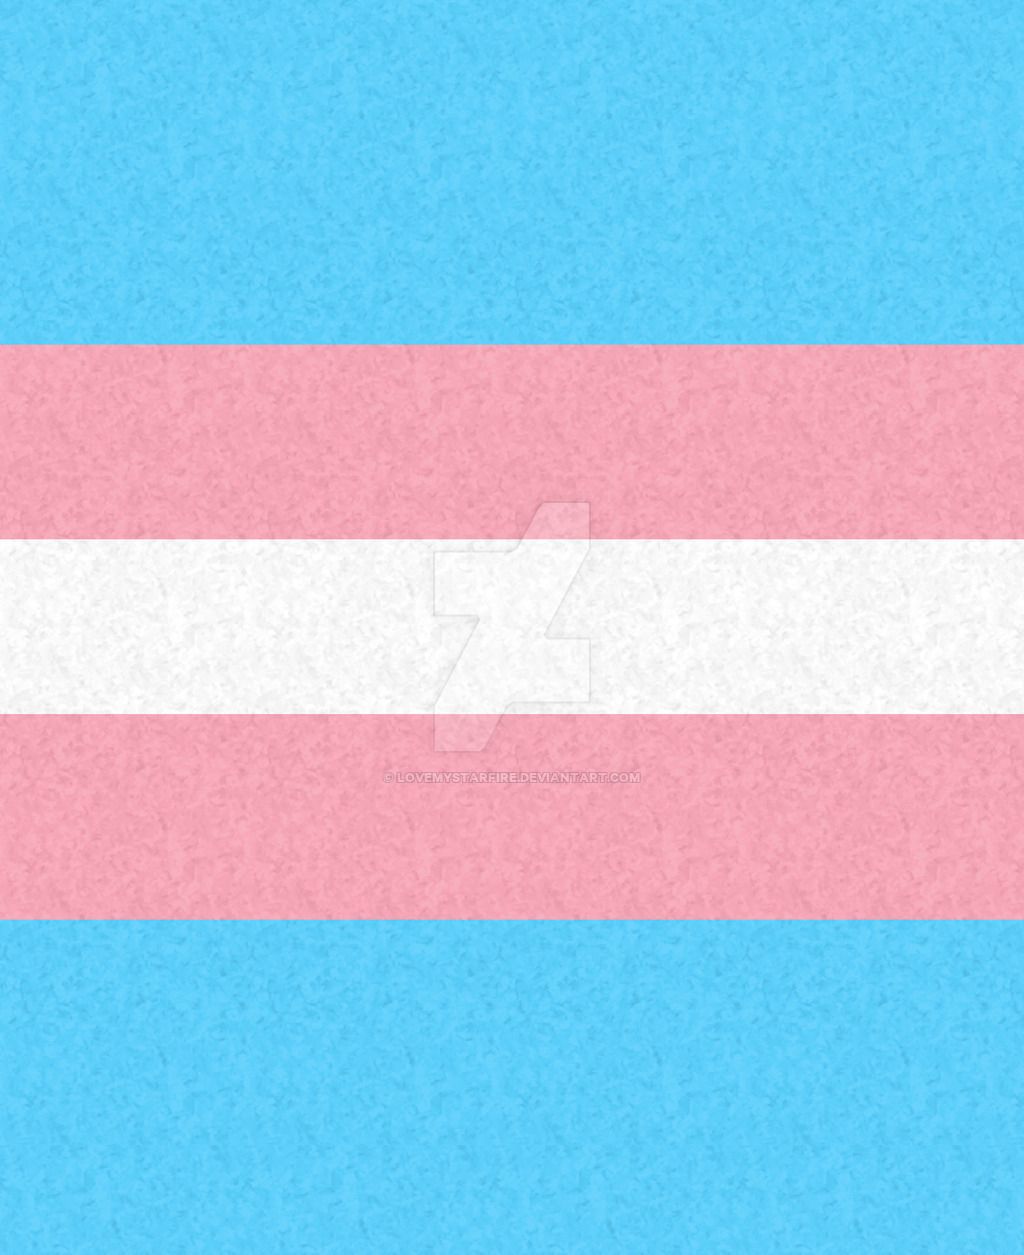 Free download transgender pride flag white transgender community